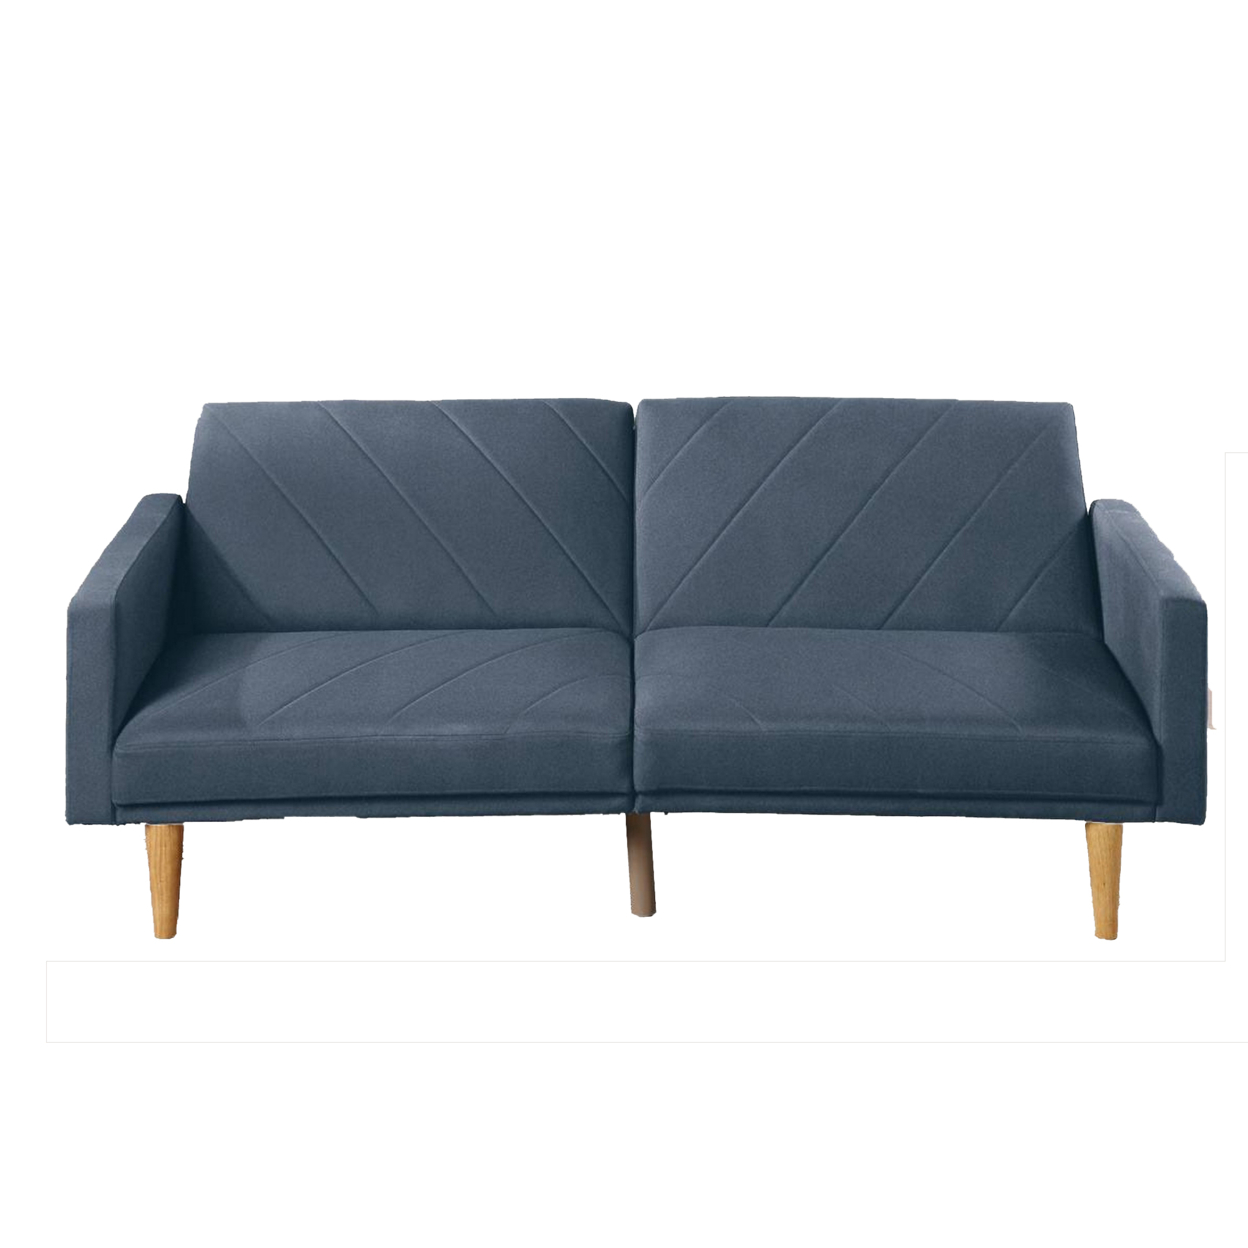 Fabric Adjustable Sofa With Chevron Pattern And Splayed Legs, Navy Blue- Saltoro Sherpi